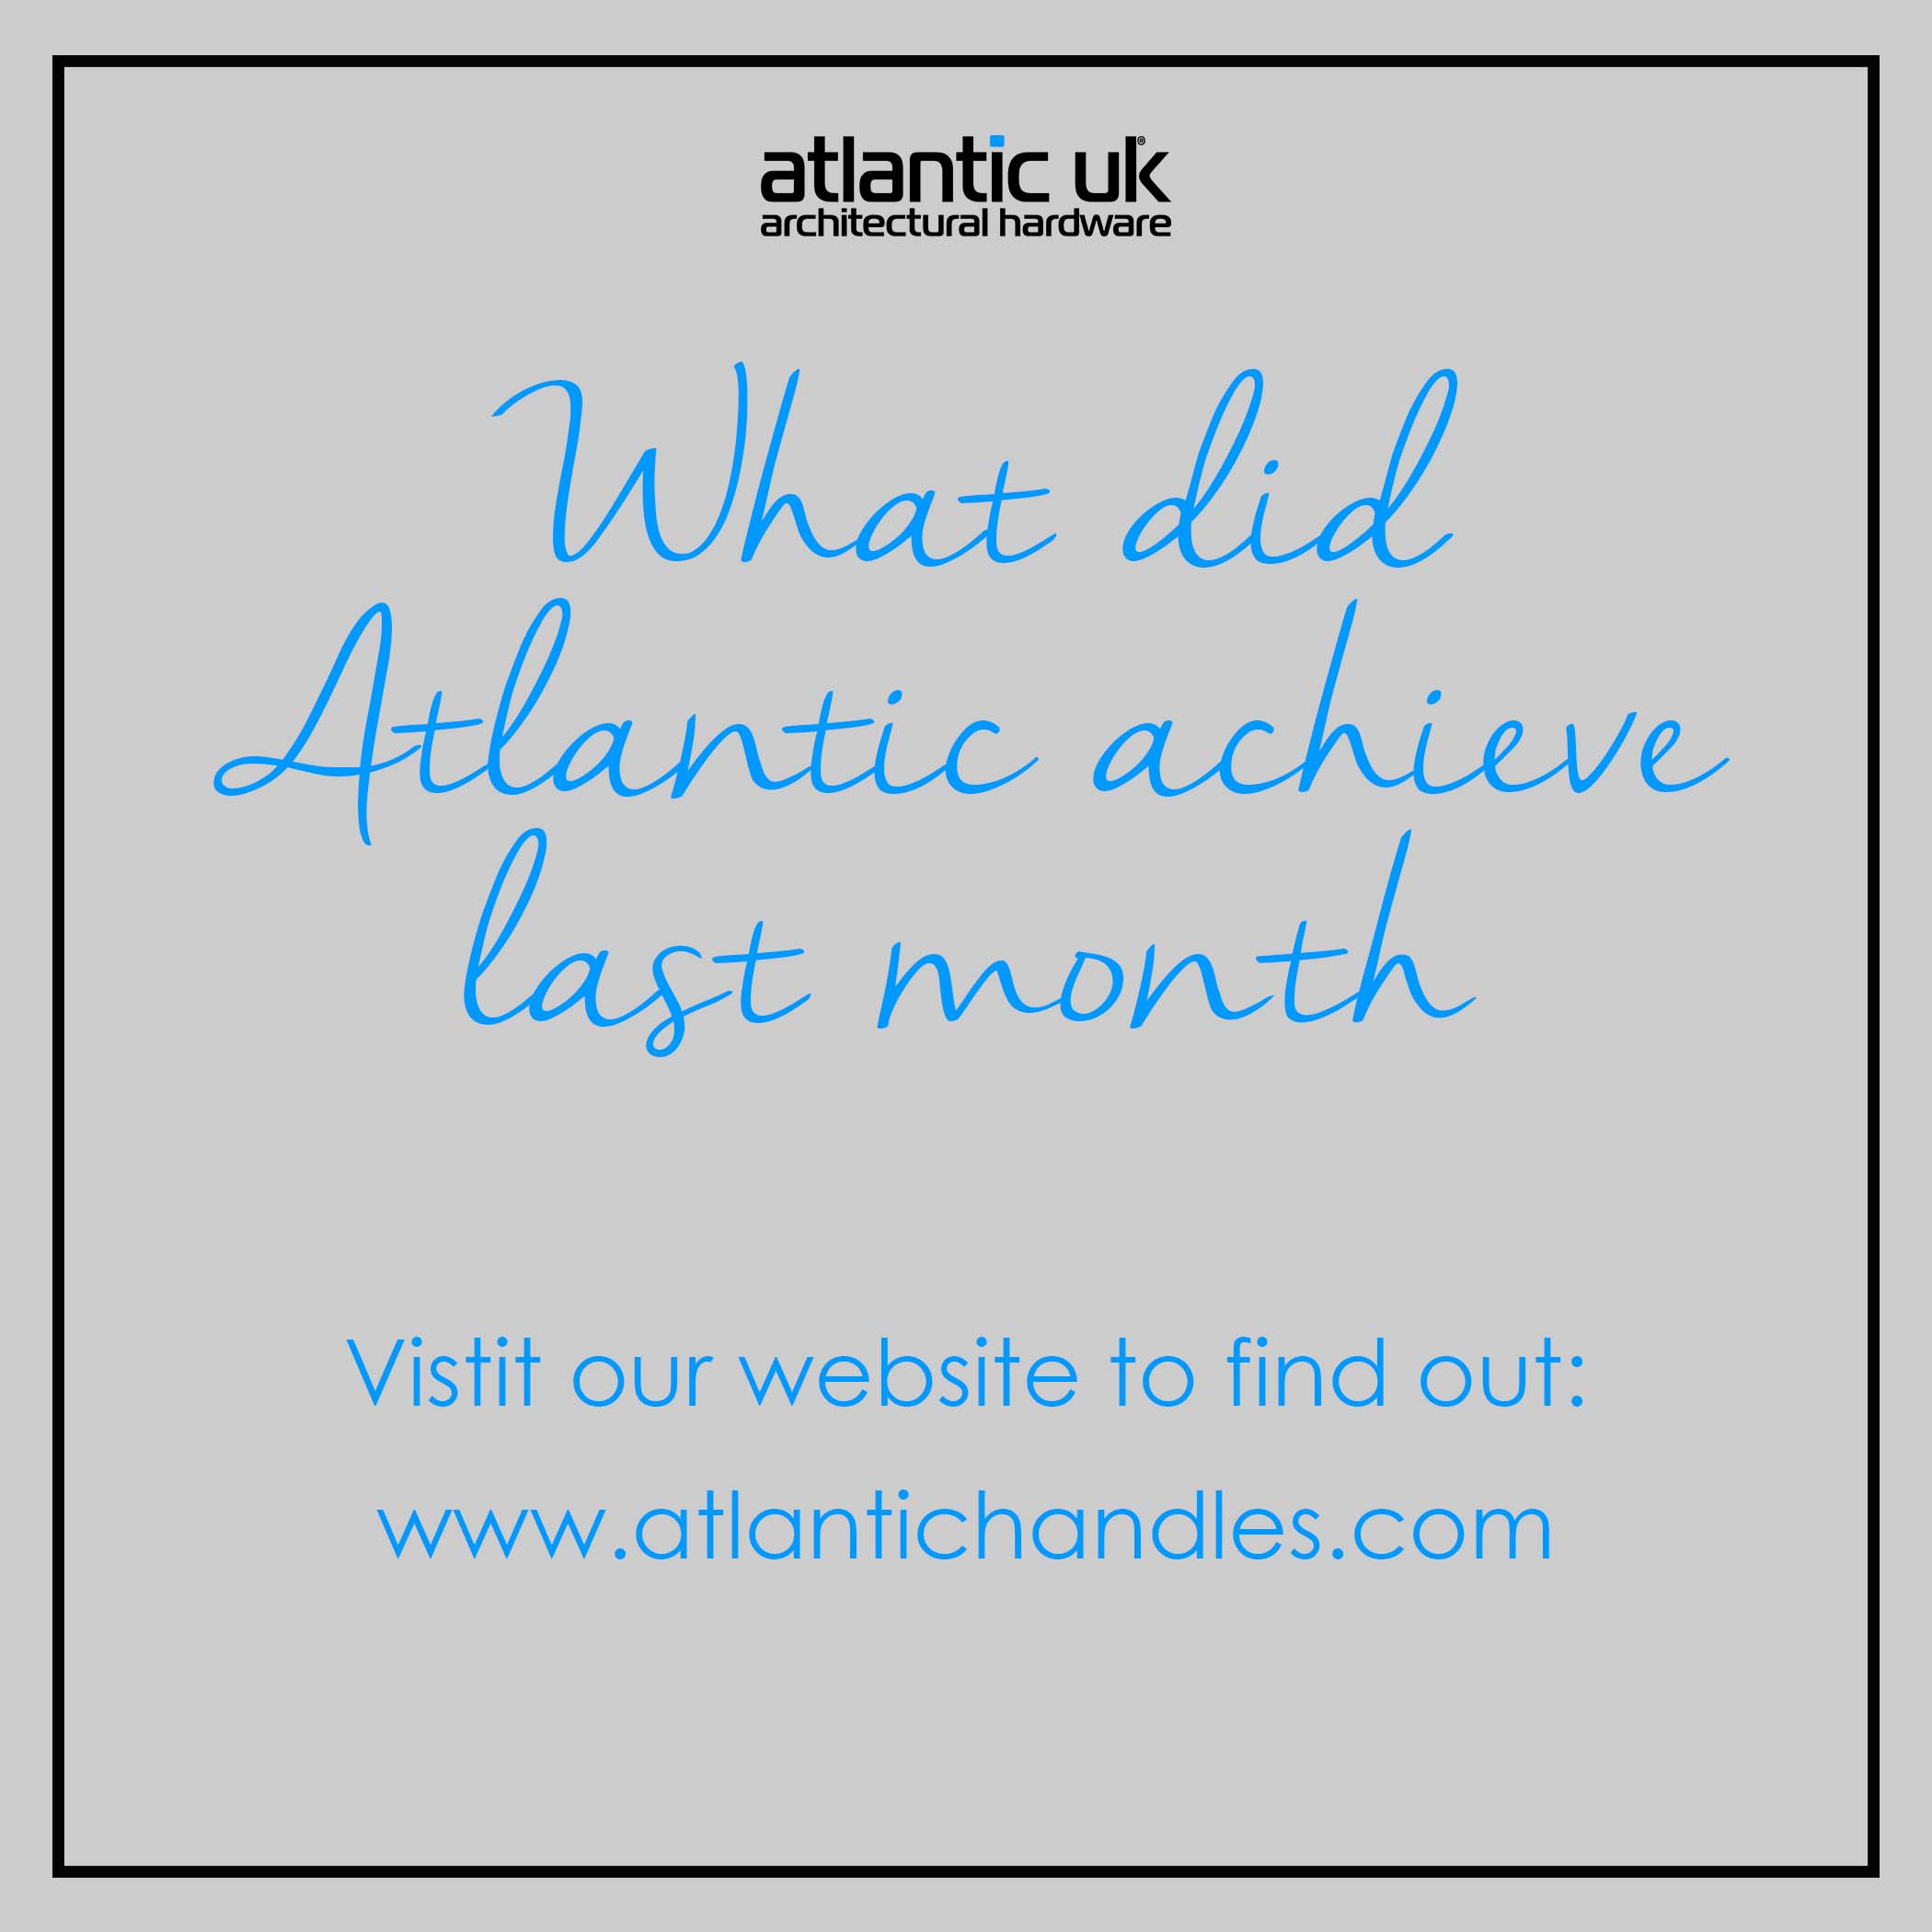 Atlantic’s achievements in April! image